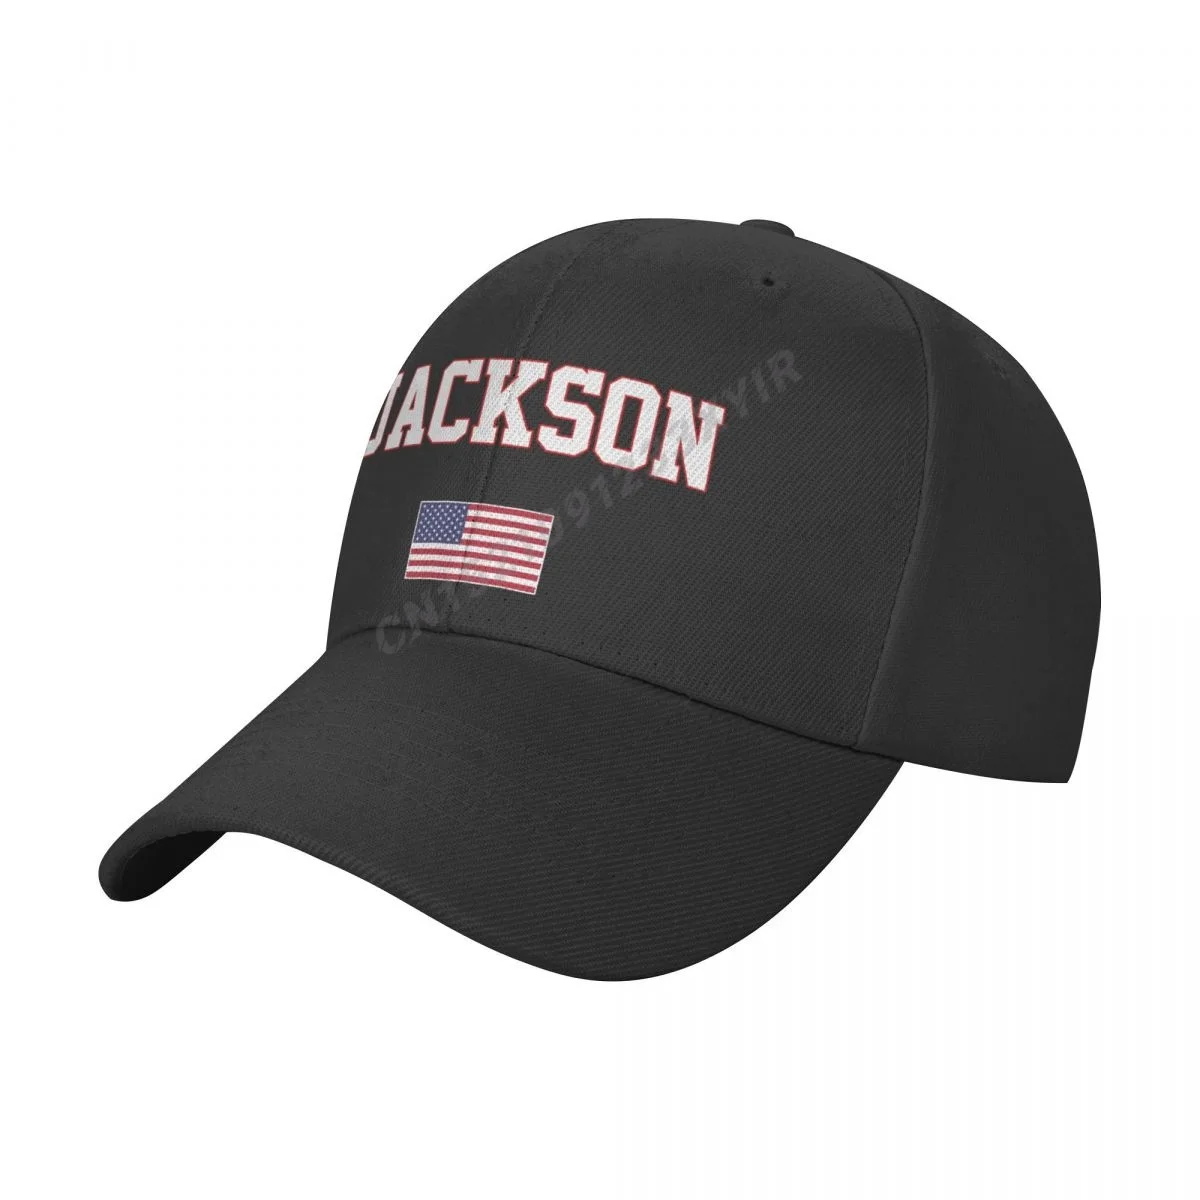 

Baseball Cap Jackson America Flag USA United States City Wild Sun Shade Peaked Adjustable Outdoor Caps